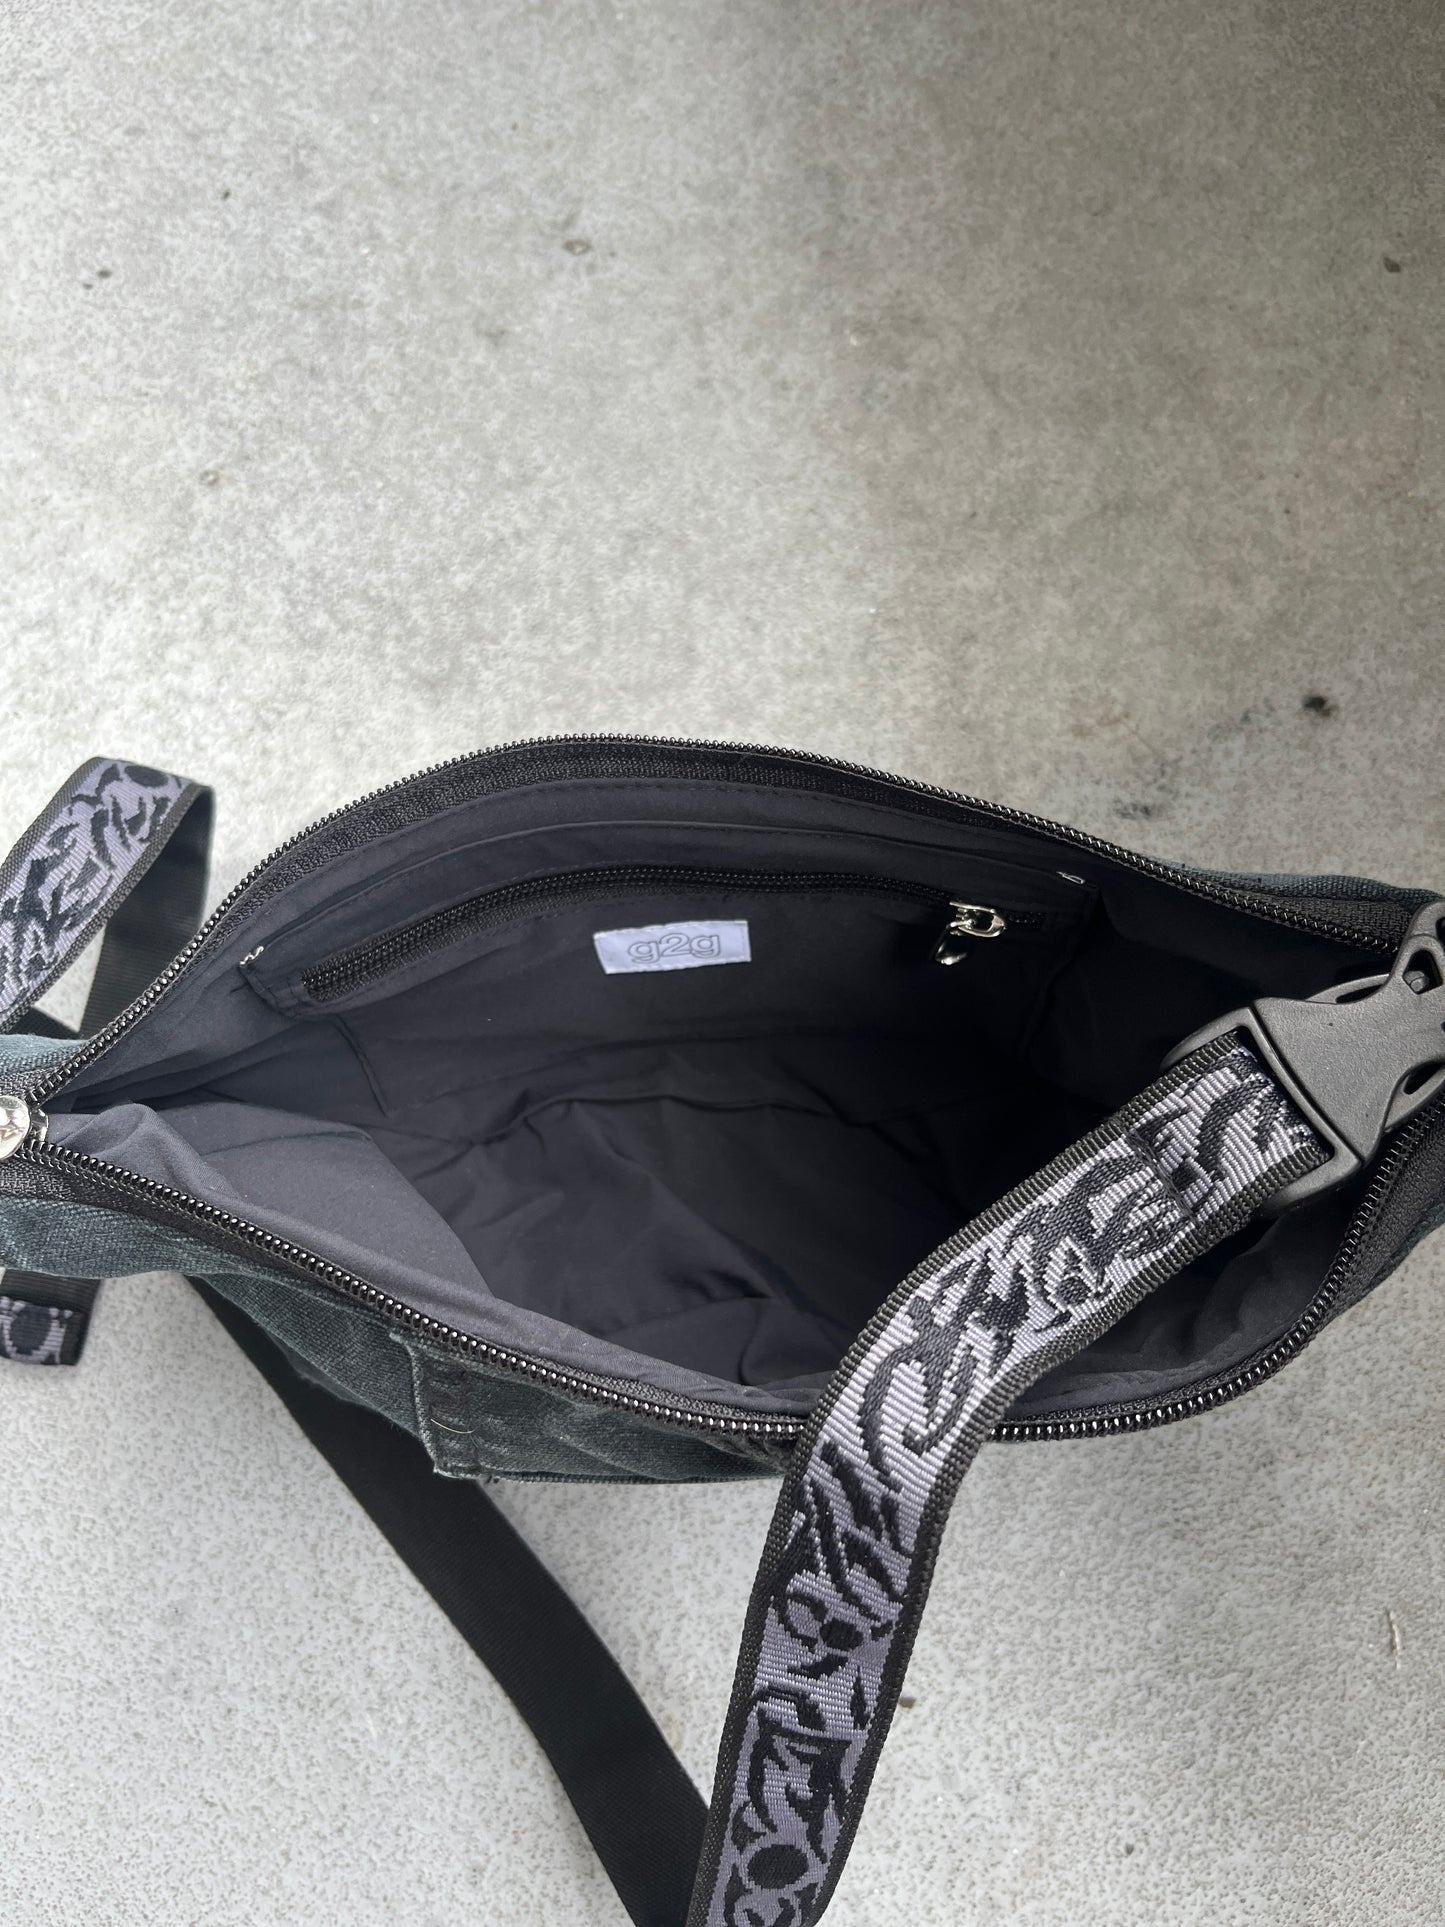 Black Carhartt Crossbody Bag